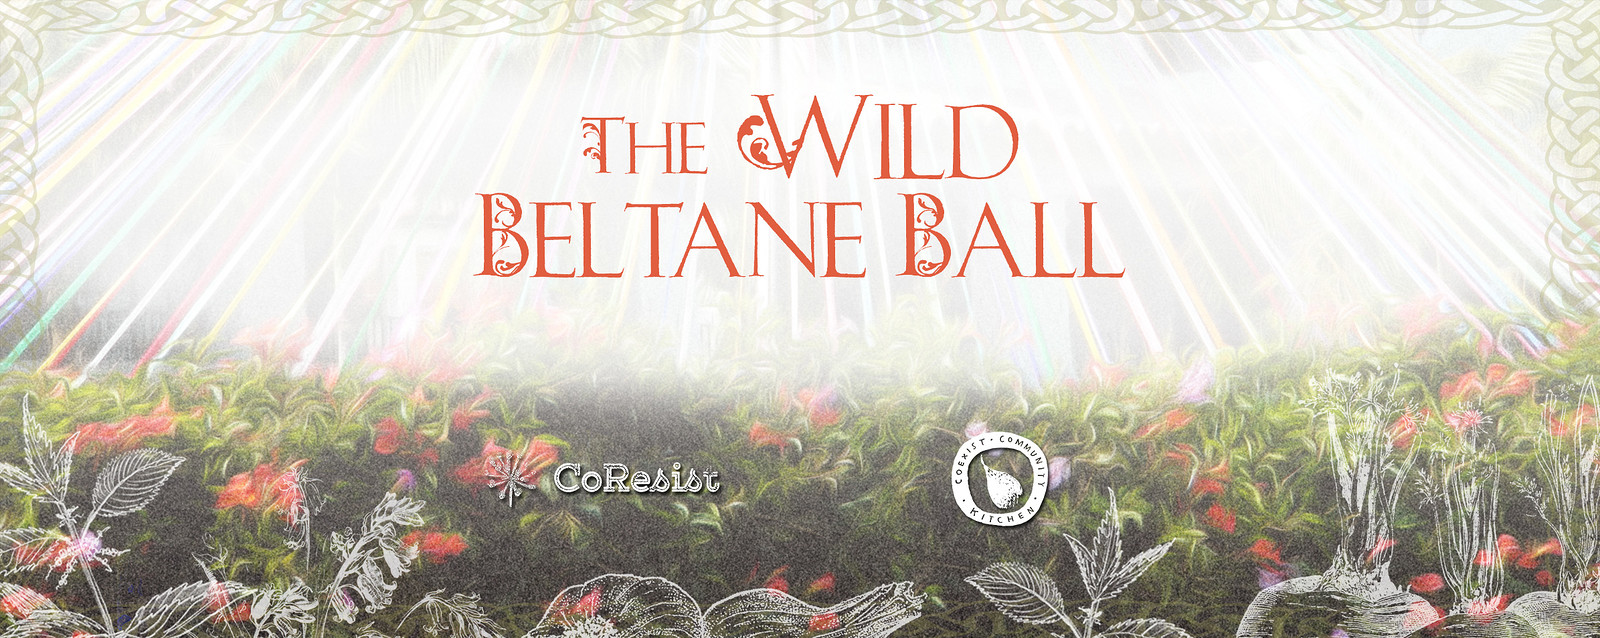 The Wild Beltane Ball at Hamilton House